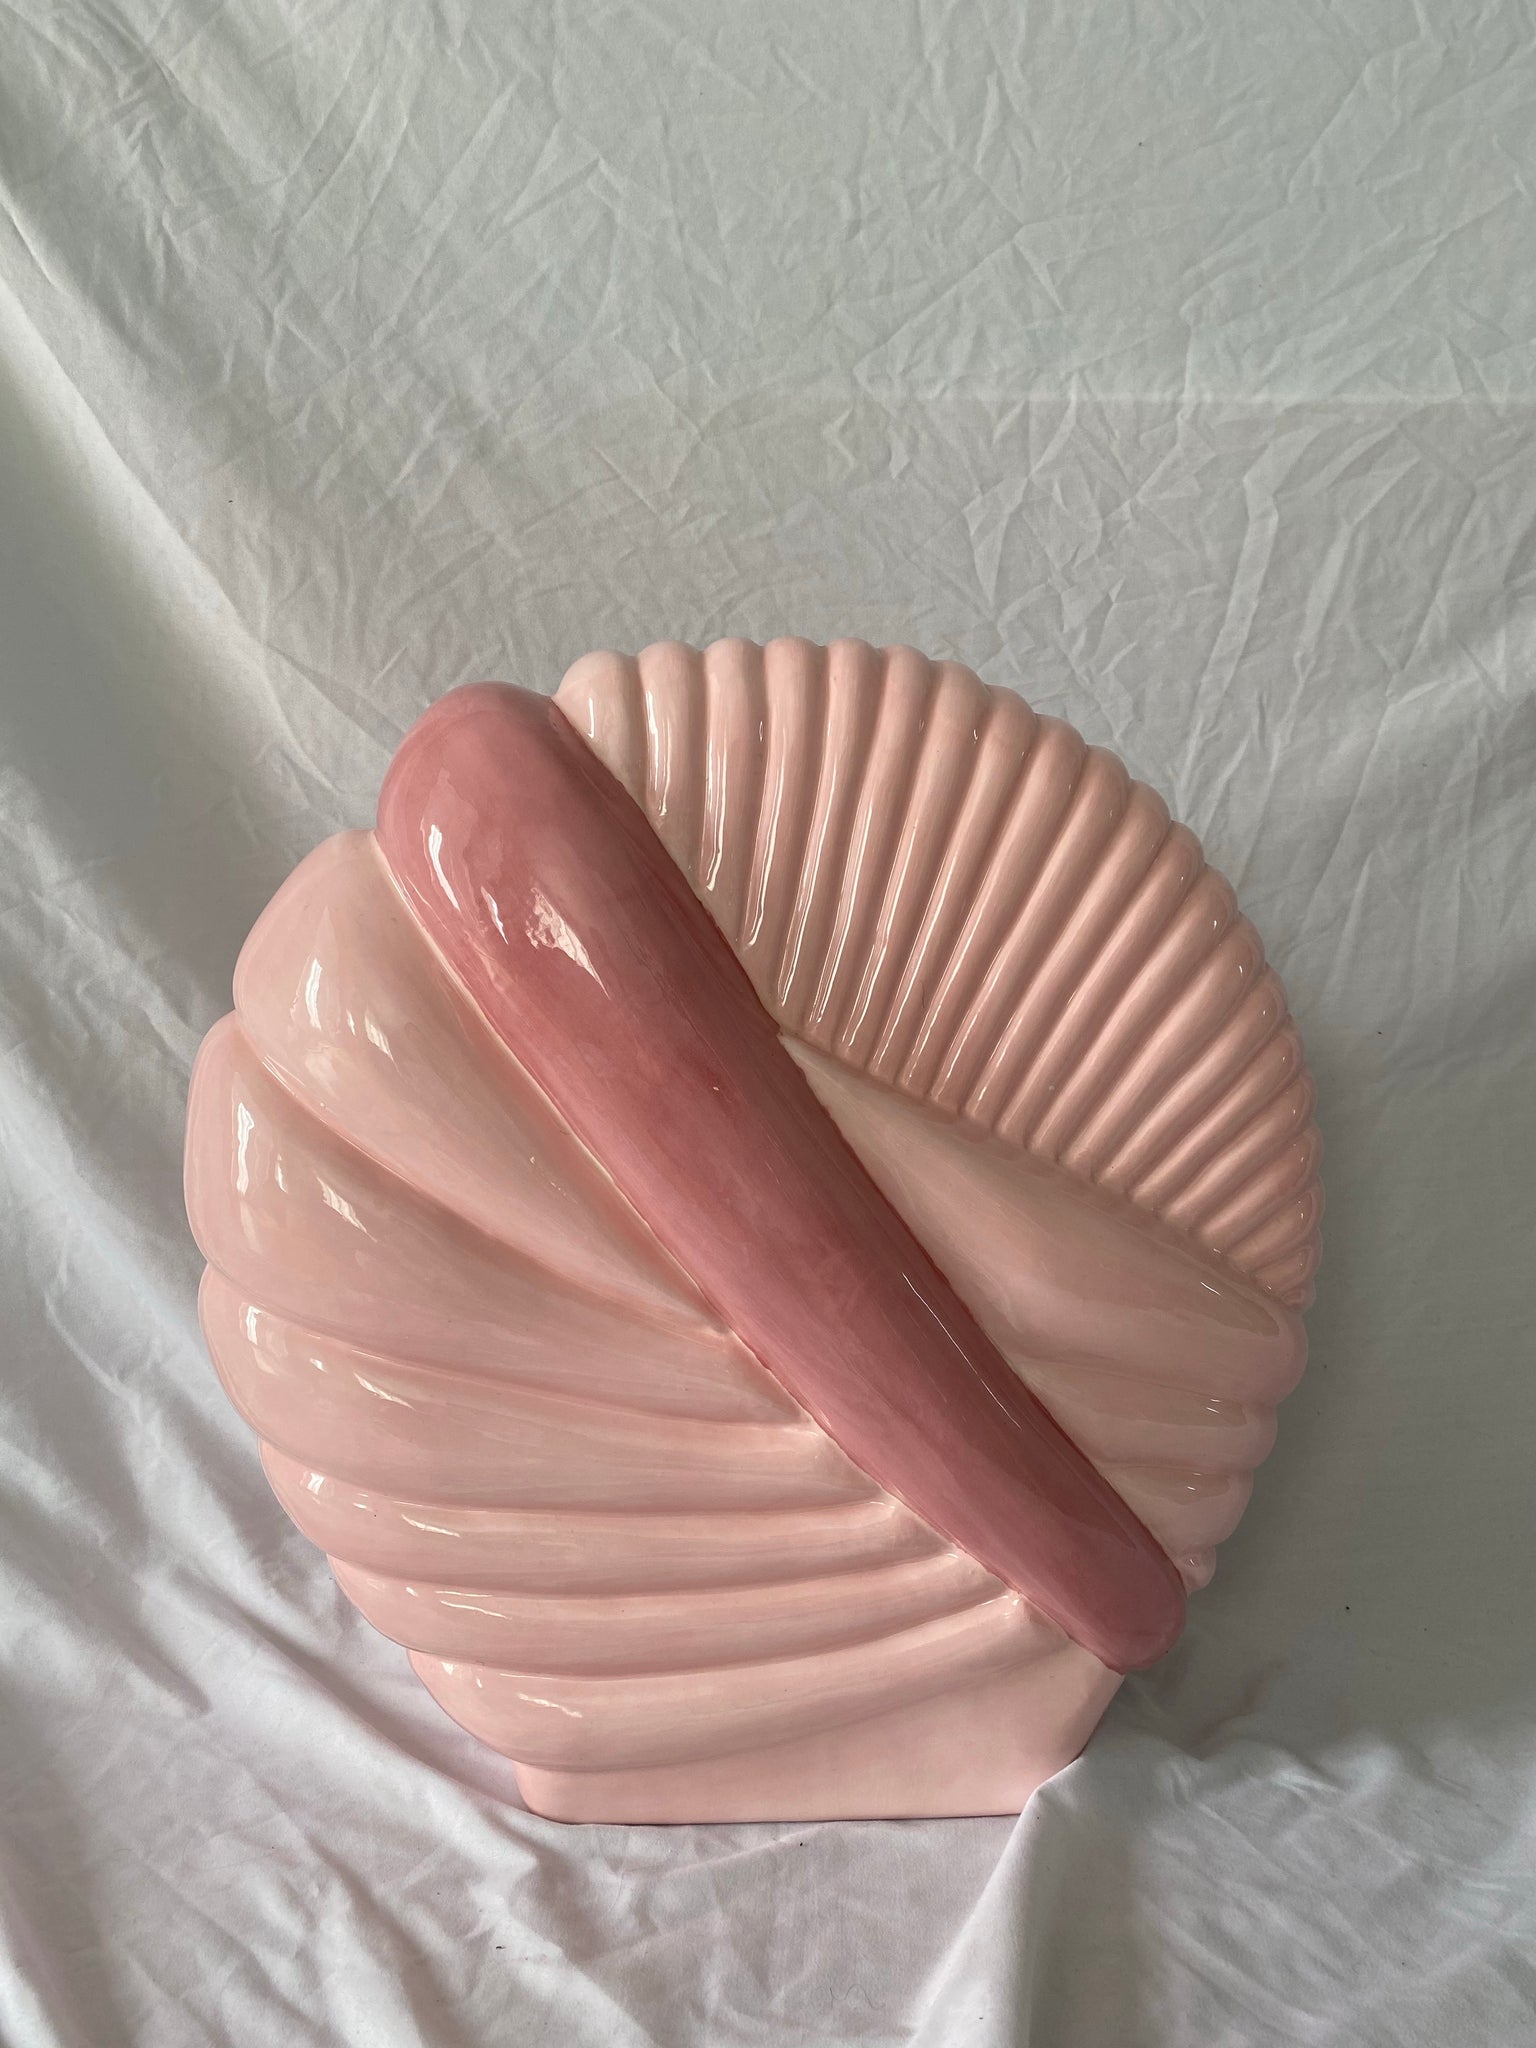 Stunning XL pink art deco vase